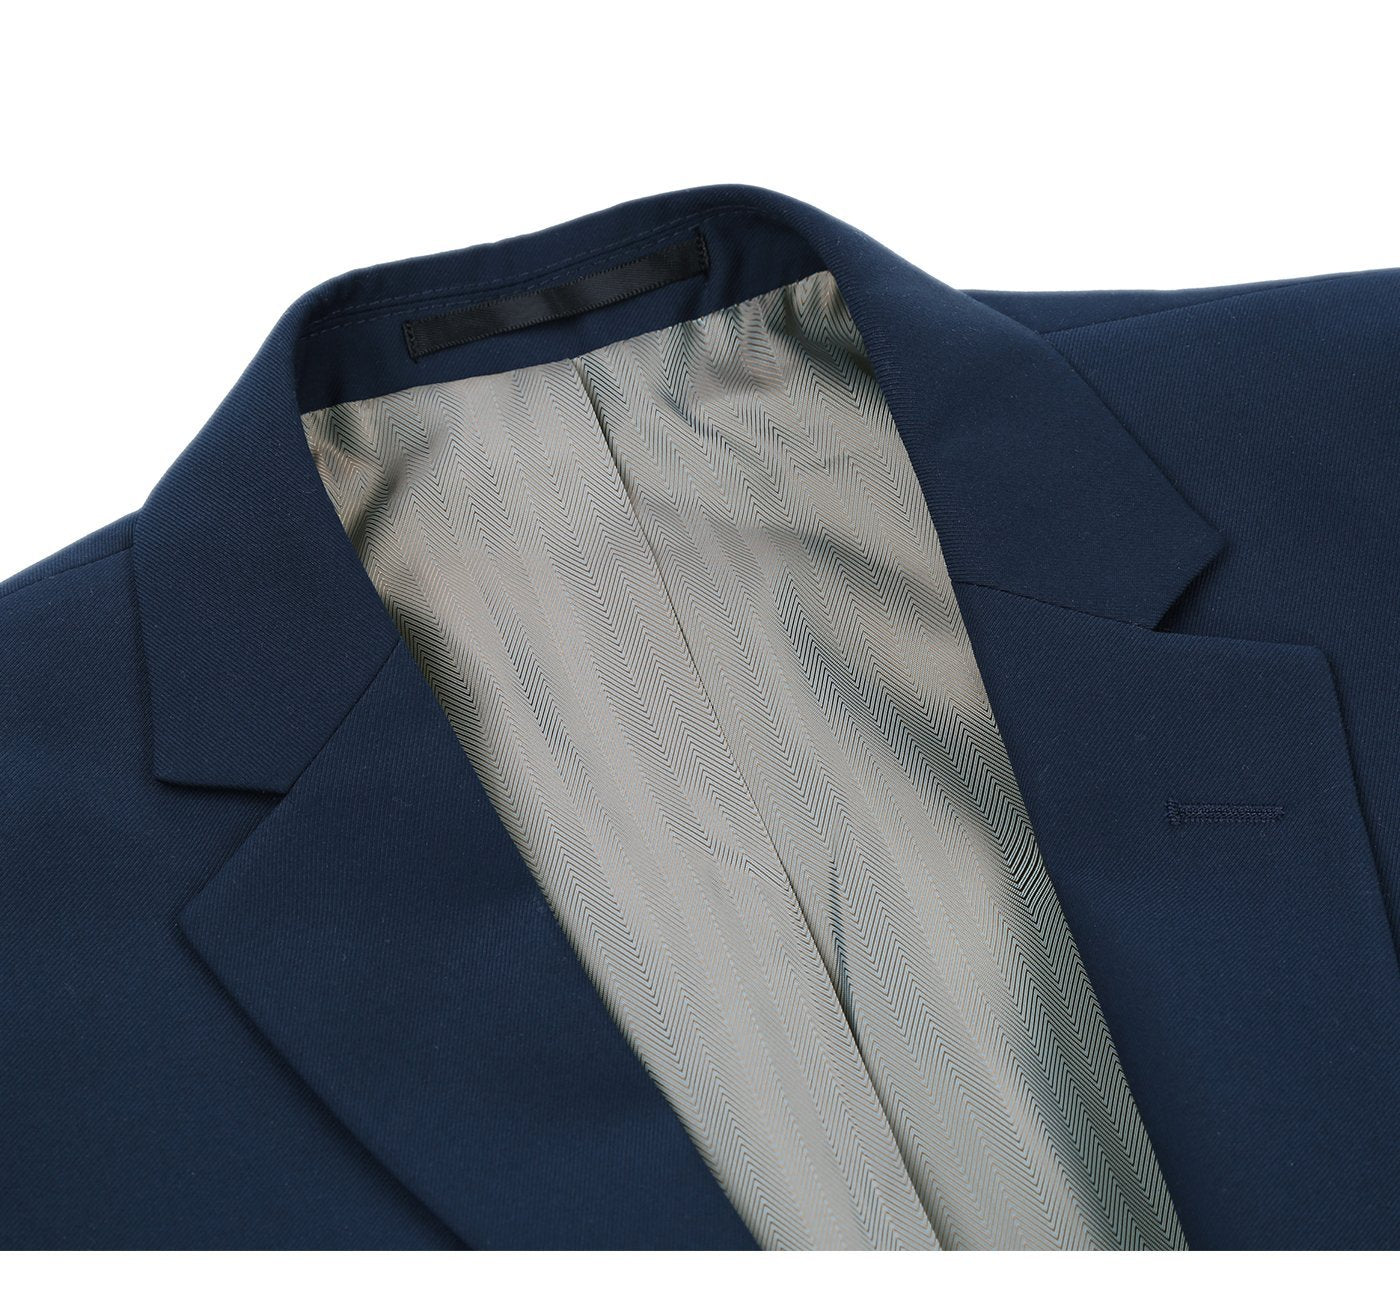 201-19 Men's Navy Blue 2-Piece Single Breasted Notch Lapel Suit